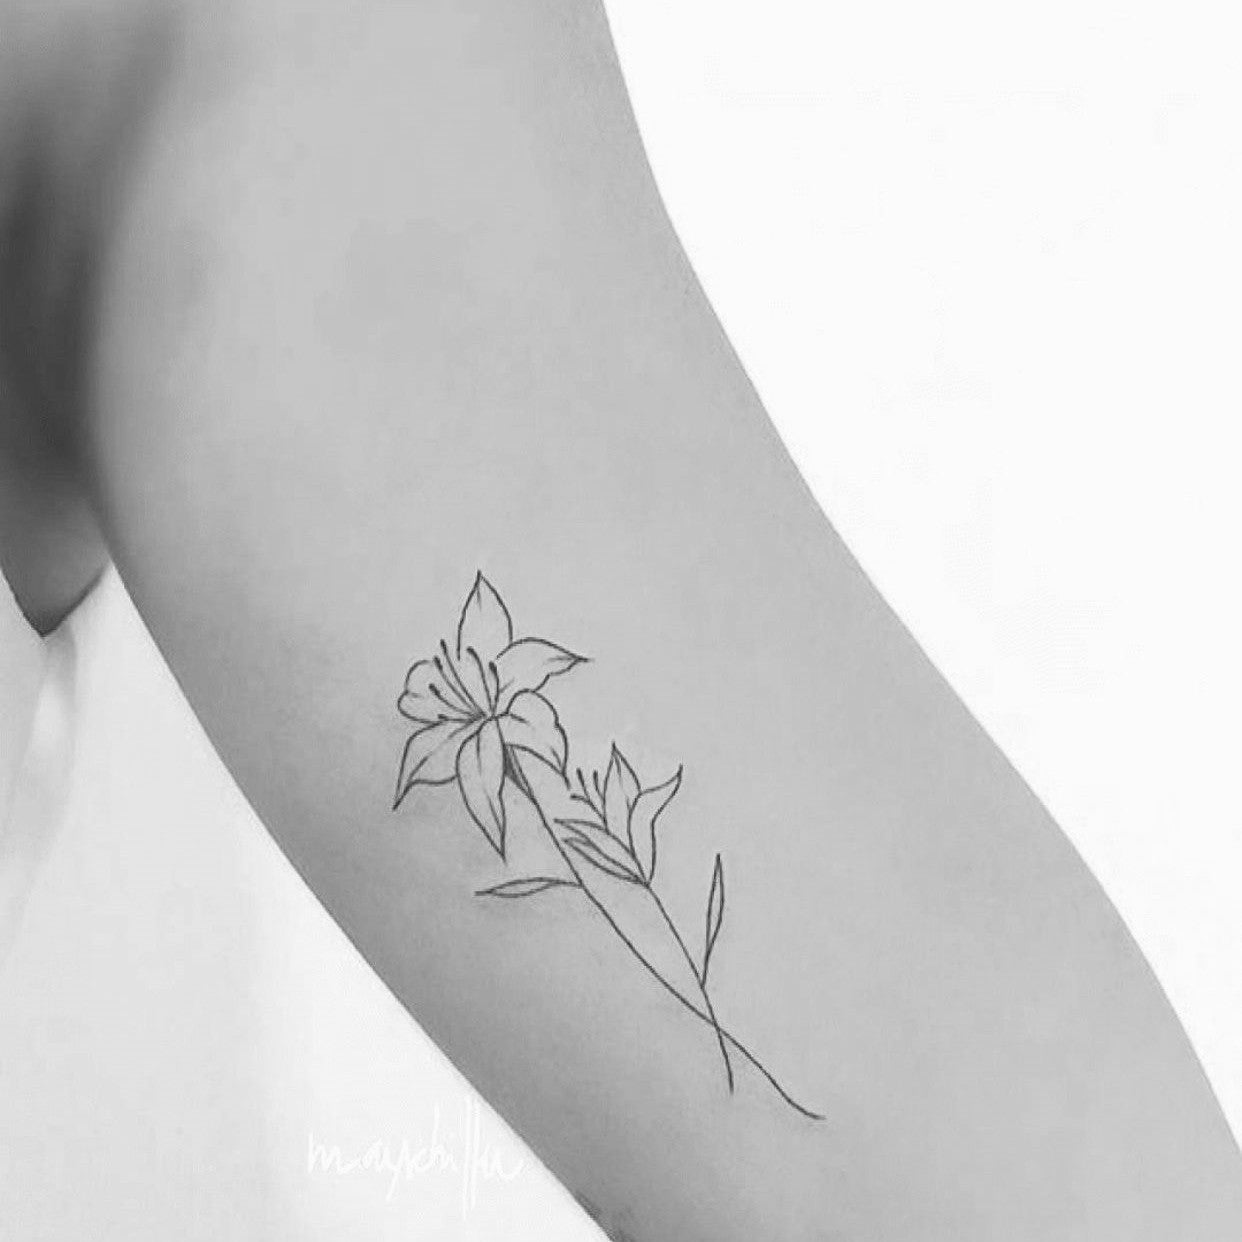 Daffodil flower tattoo meaning